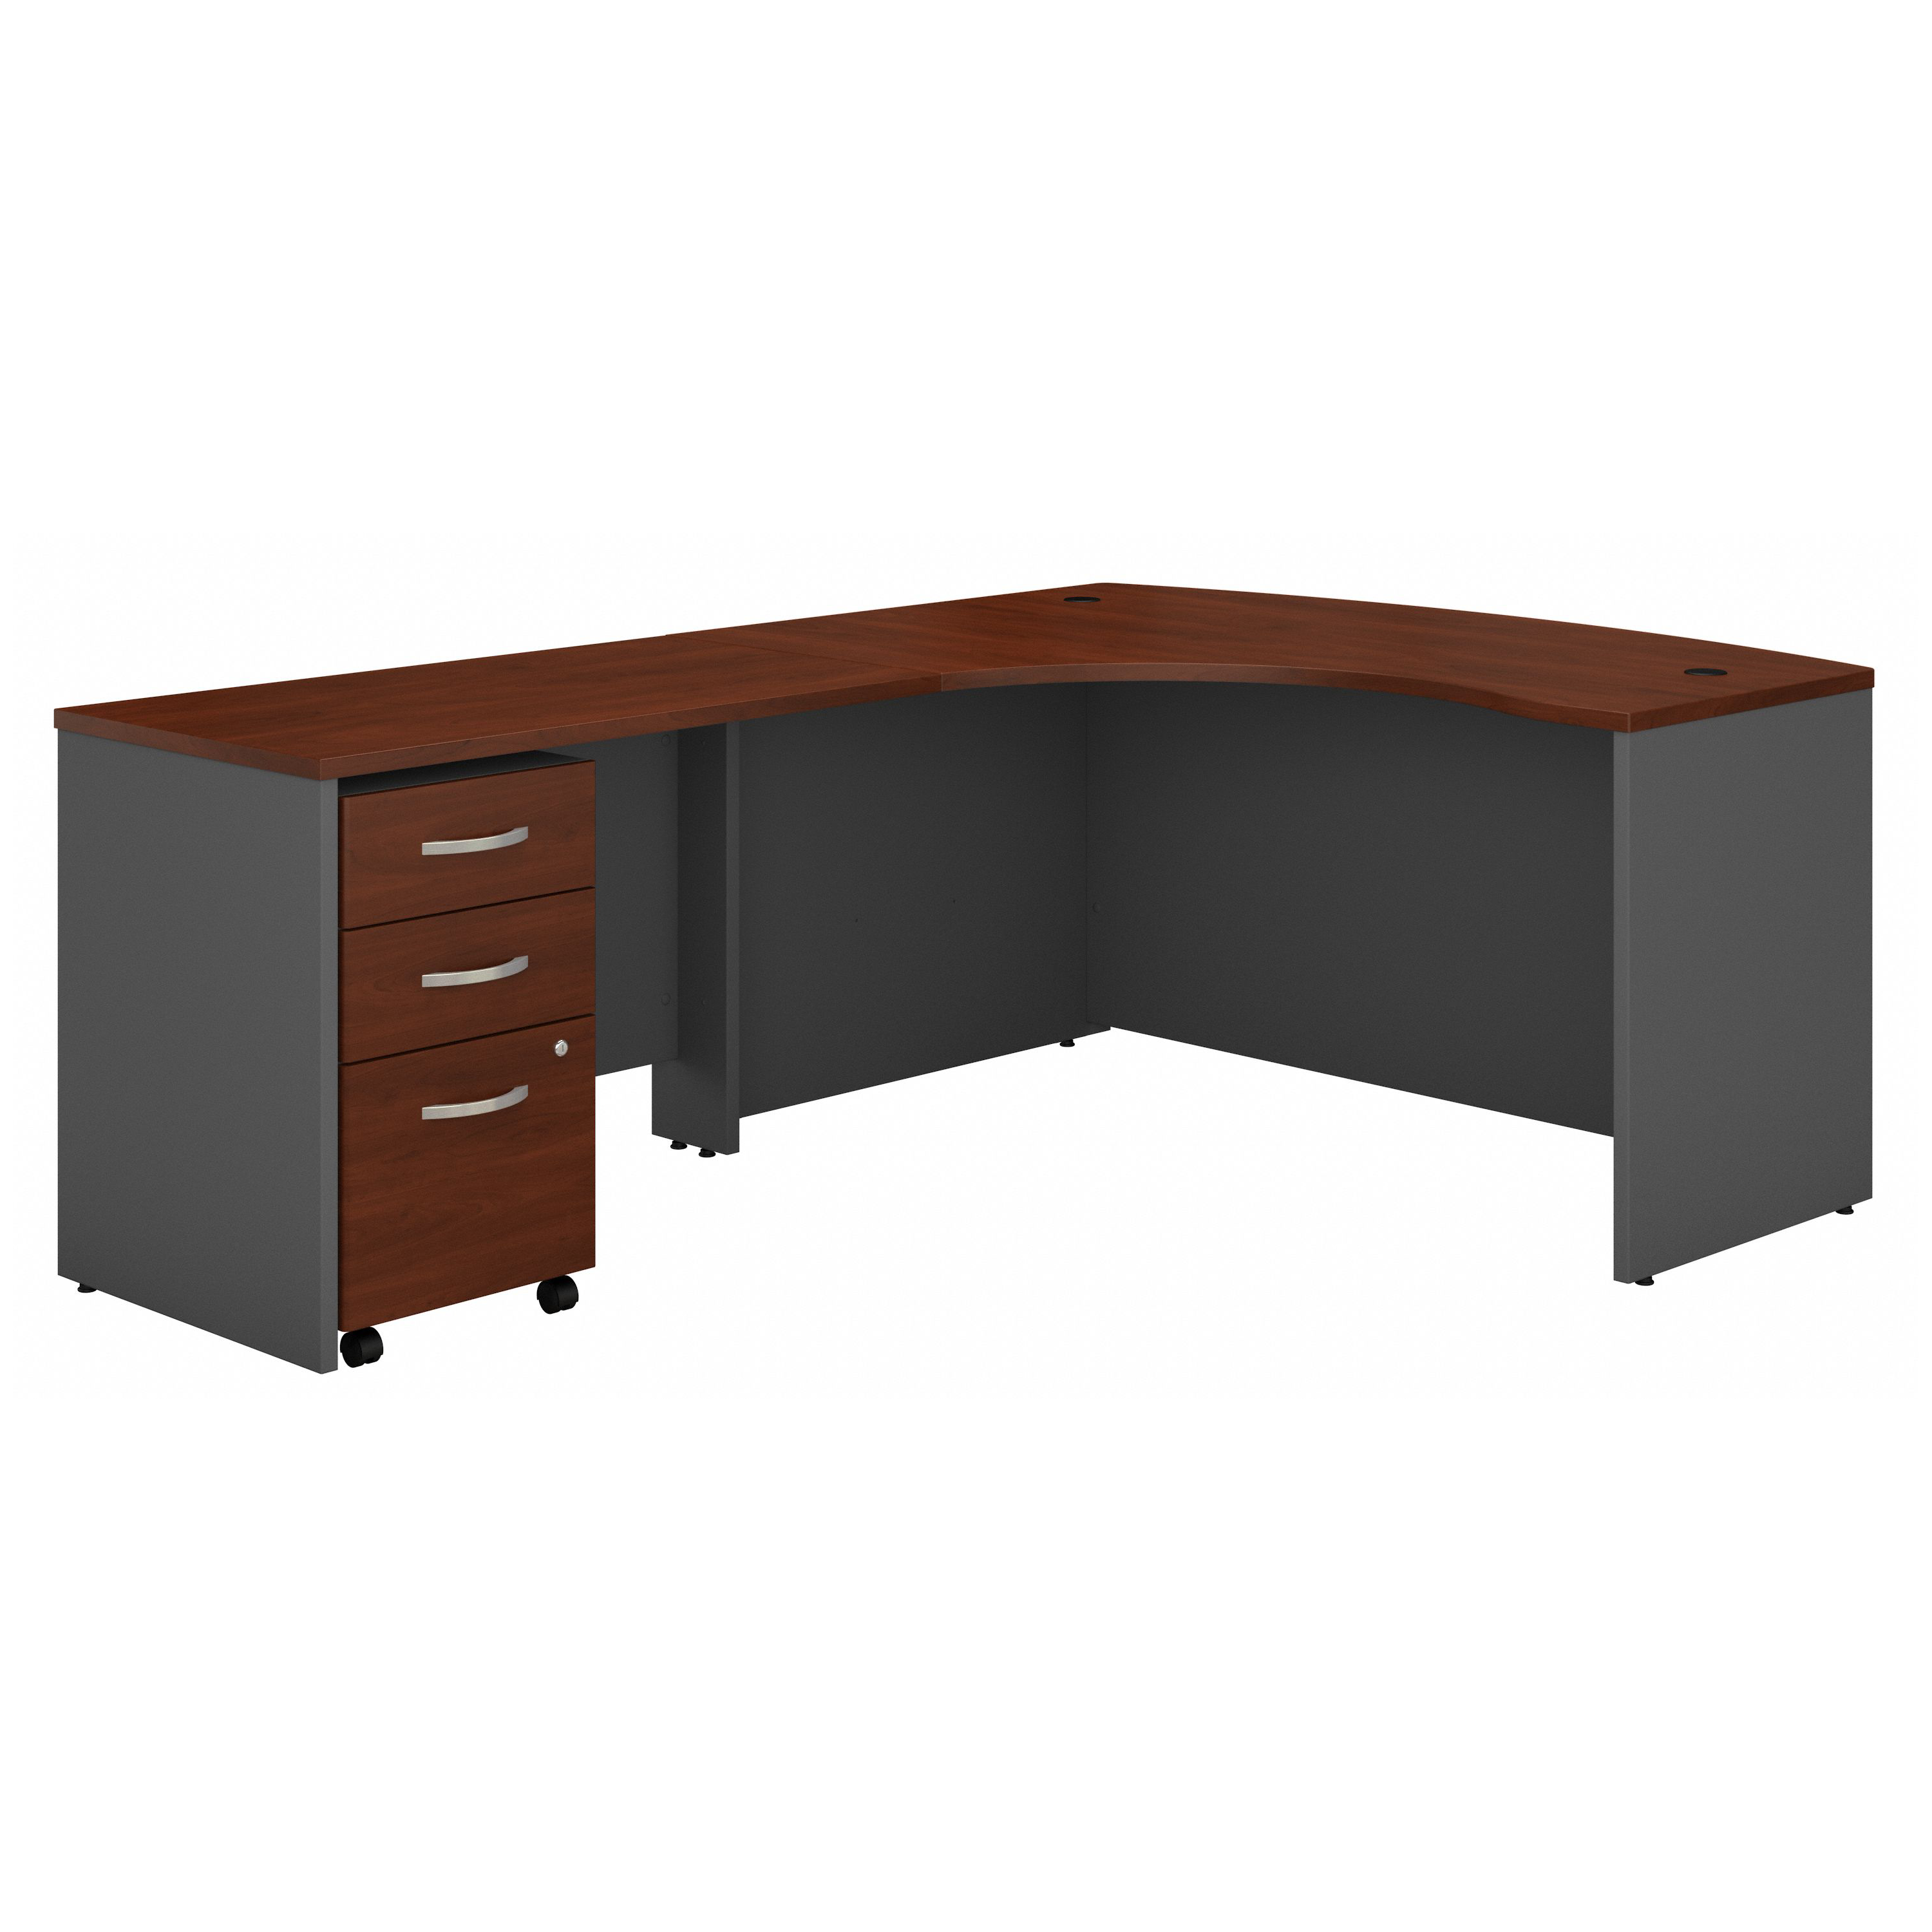 Shop Bush Business Furniture Series C Left Handed L Shaped Desk with Mobile File Cabinet 02 SRC007HCLSU #color_hansen cherry/graphite gray